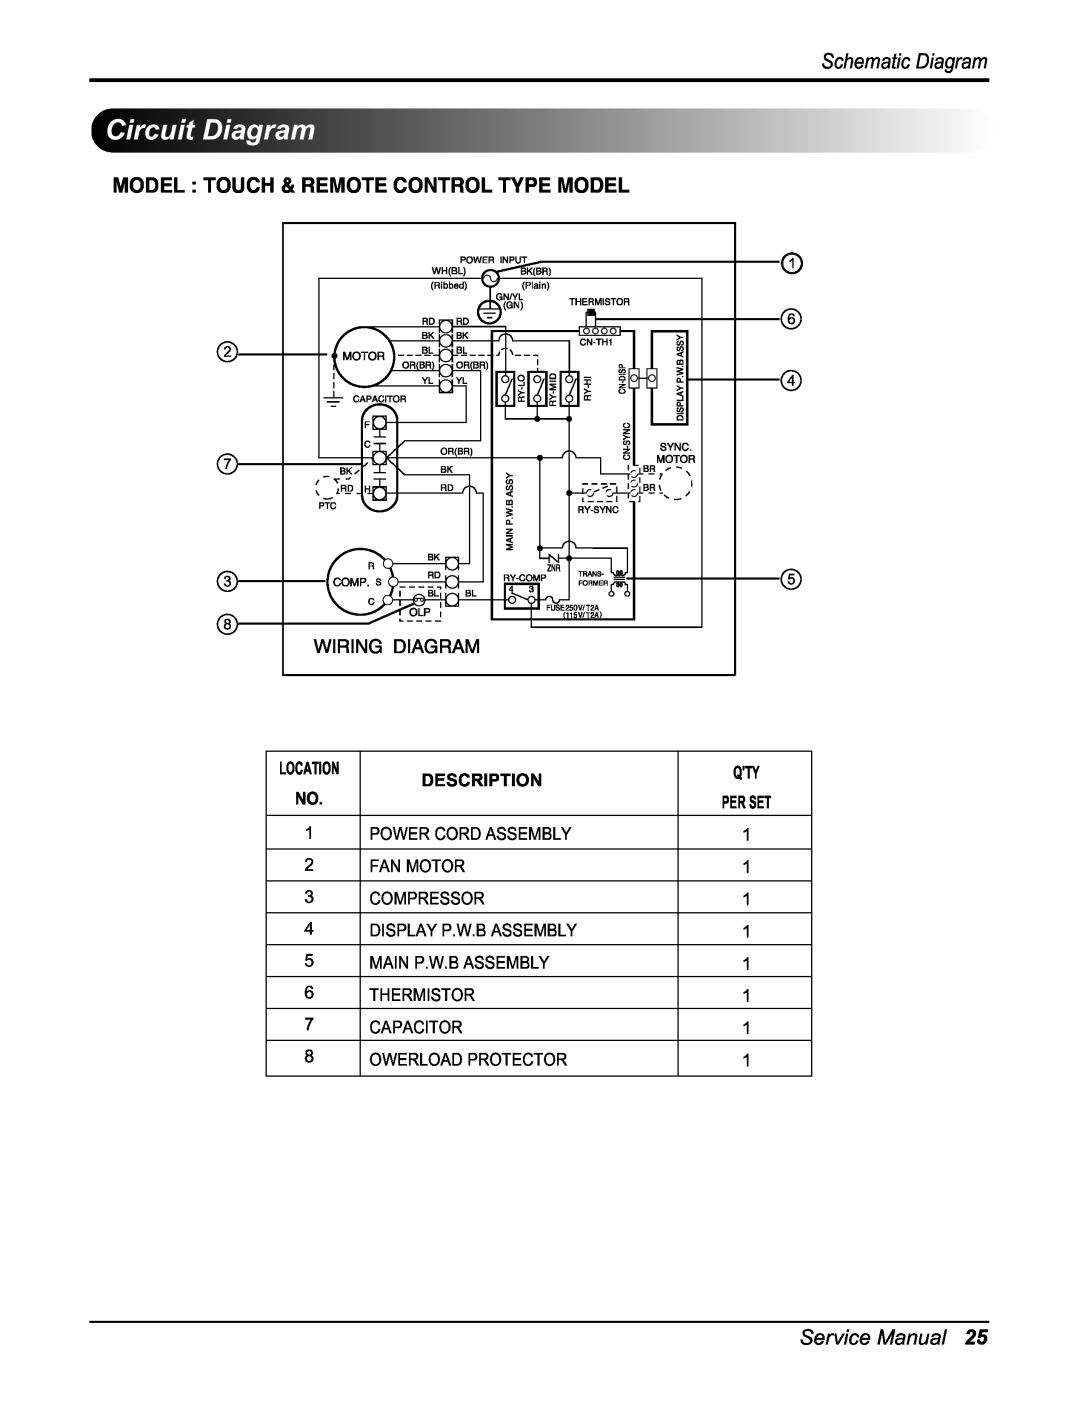 Heat Controller RAD-81A, RAD-101A Circuit Diagram, Schematic Diagram, Model Touch & Remote Control Type Model, Description 